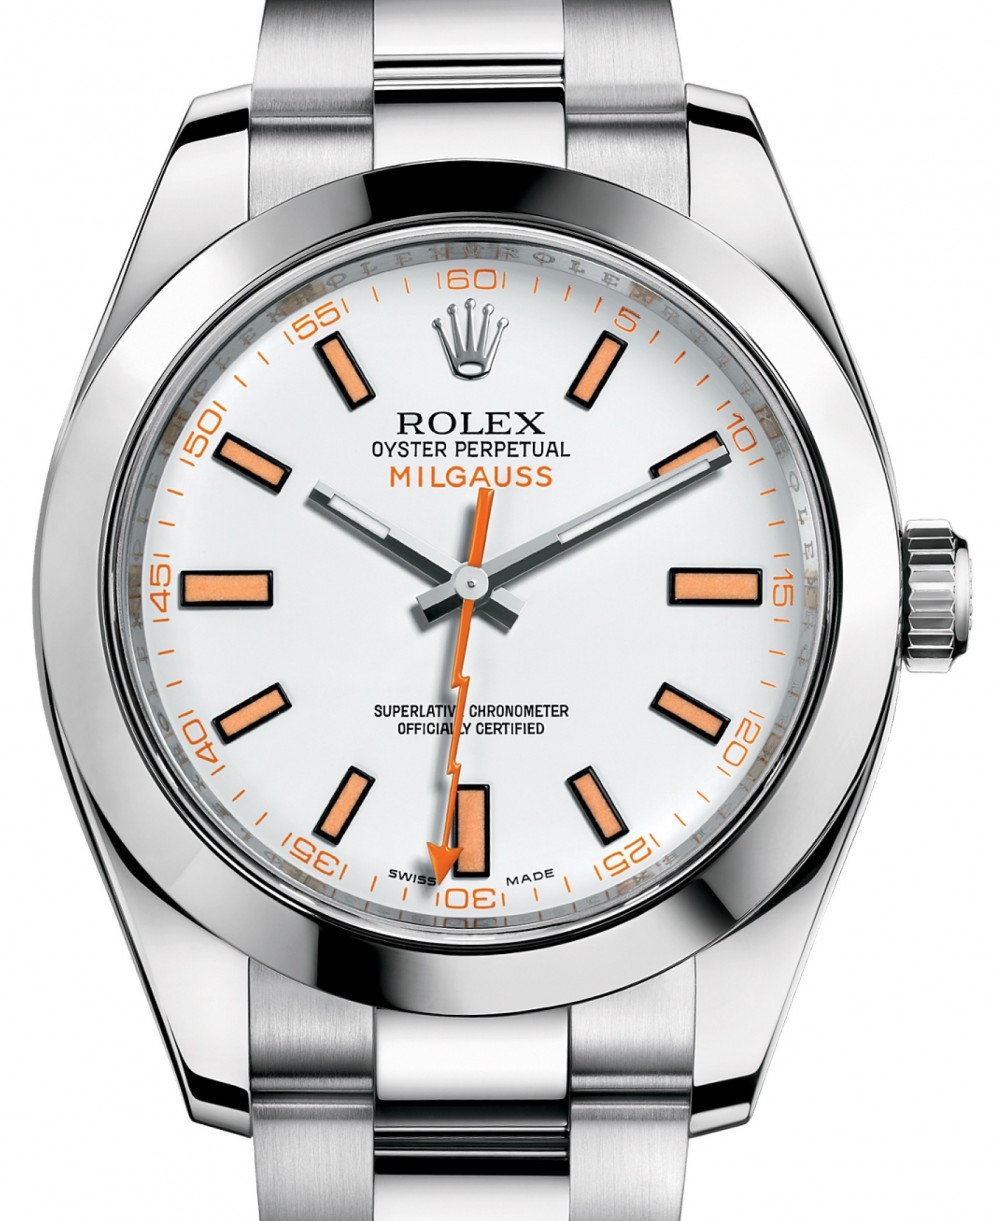 Rolex Milgauss Stainless Steel White Dial Smooth Bezel Oyster Bracelet  116400 - BRAND NEW